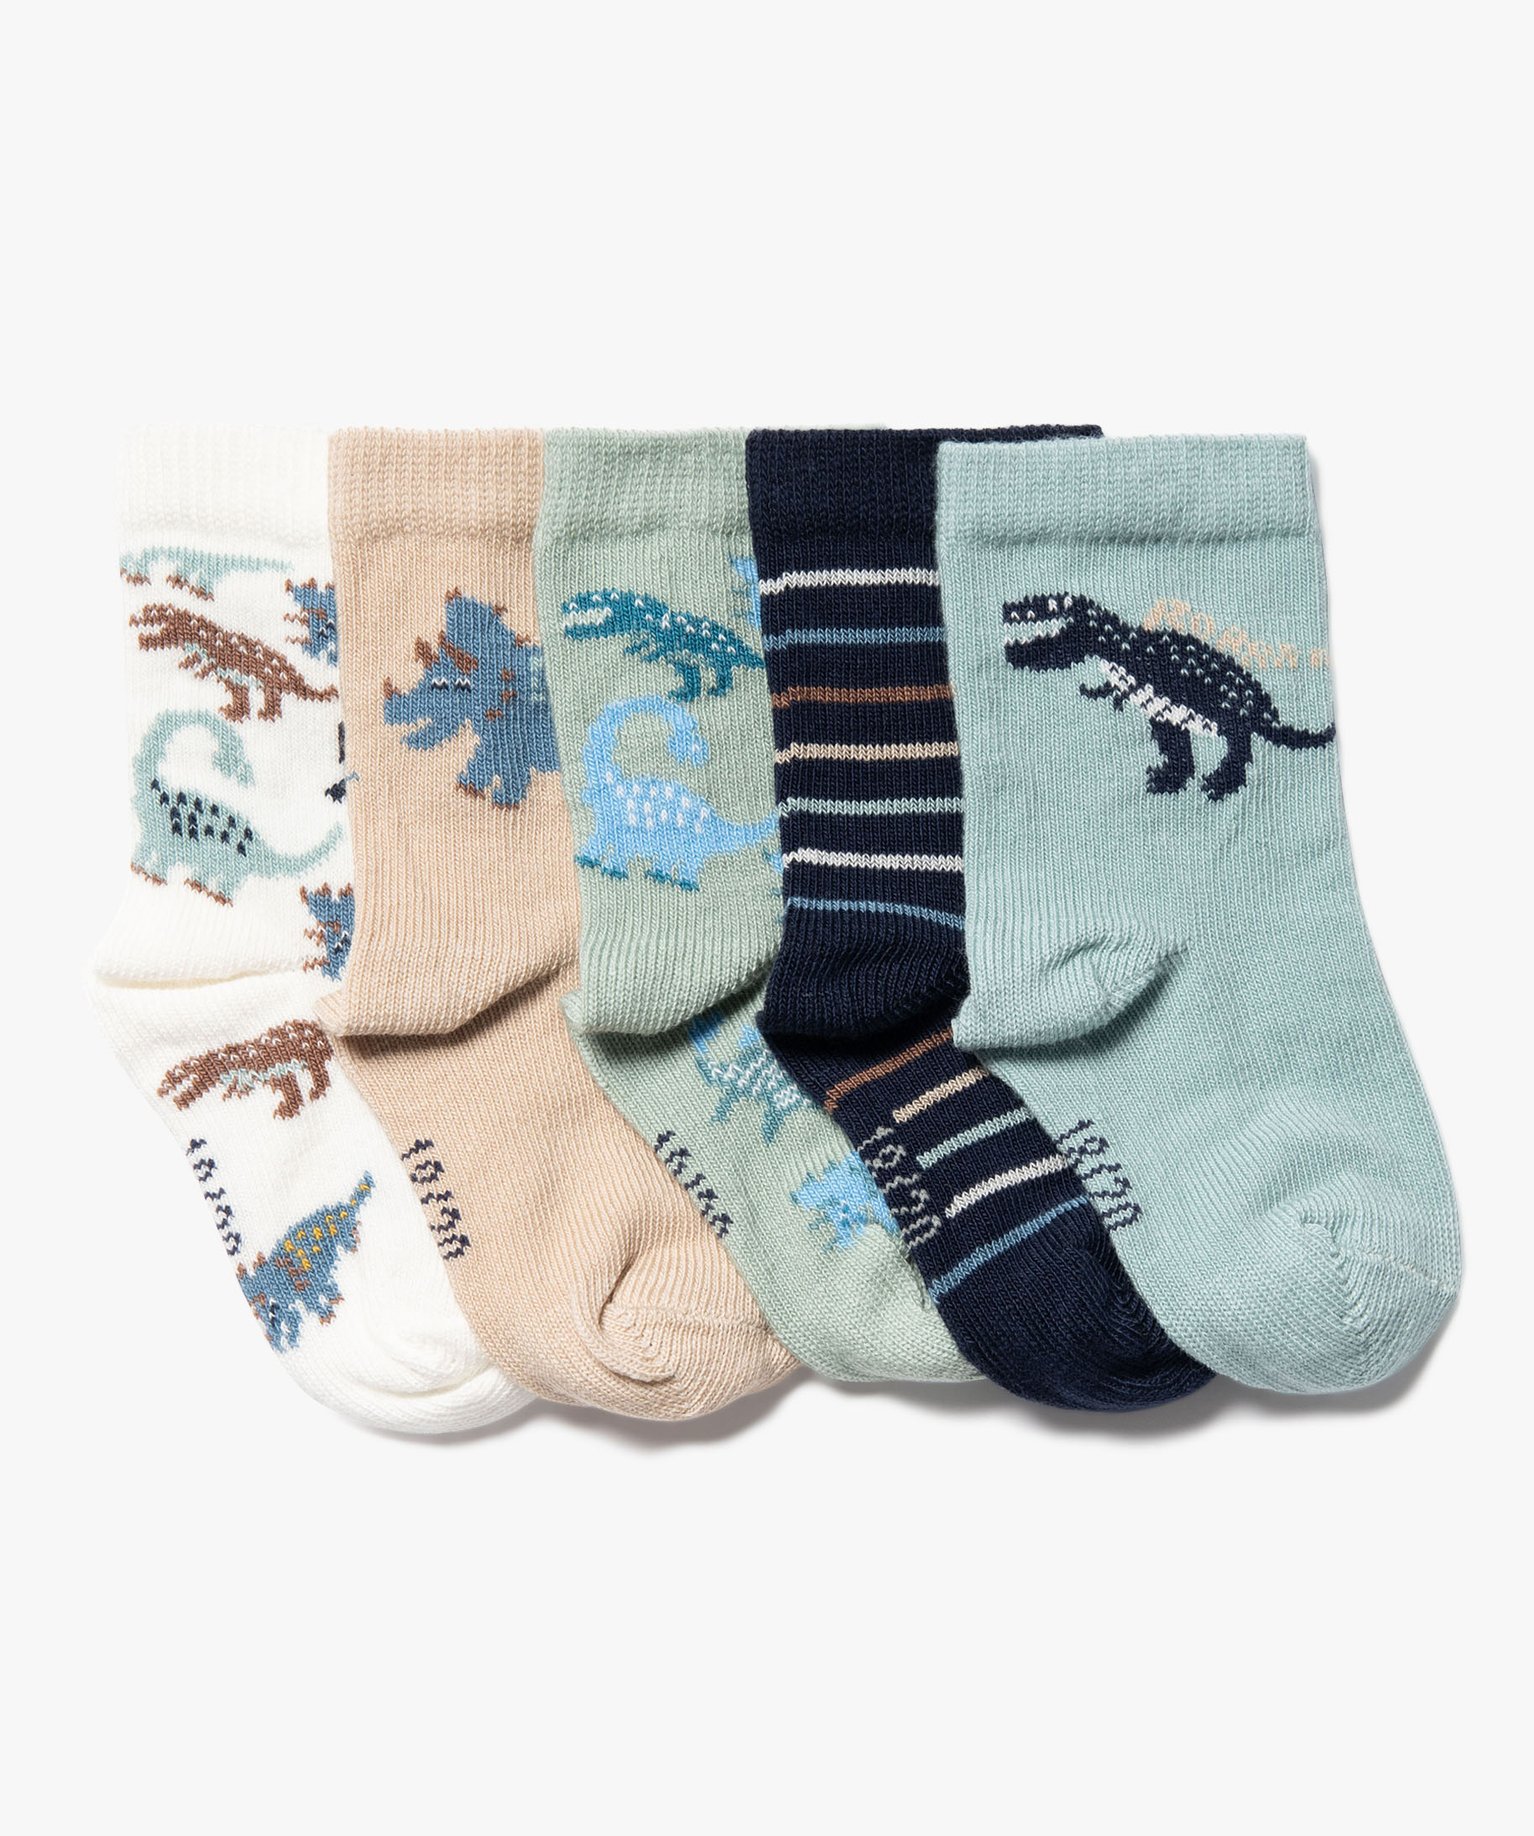 chaussettes a motifs dinosaures bebe (lot de 5) bleu chaussettes